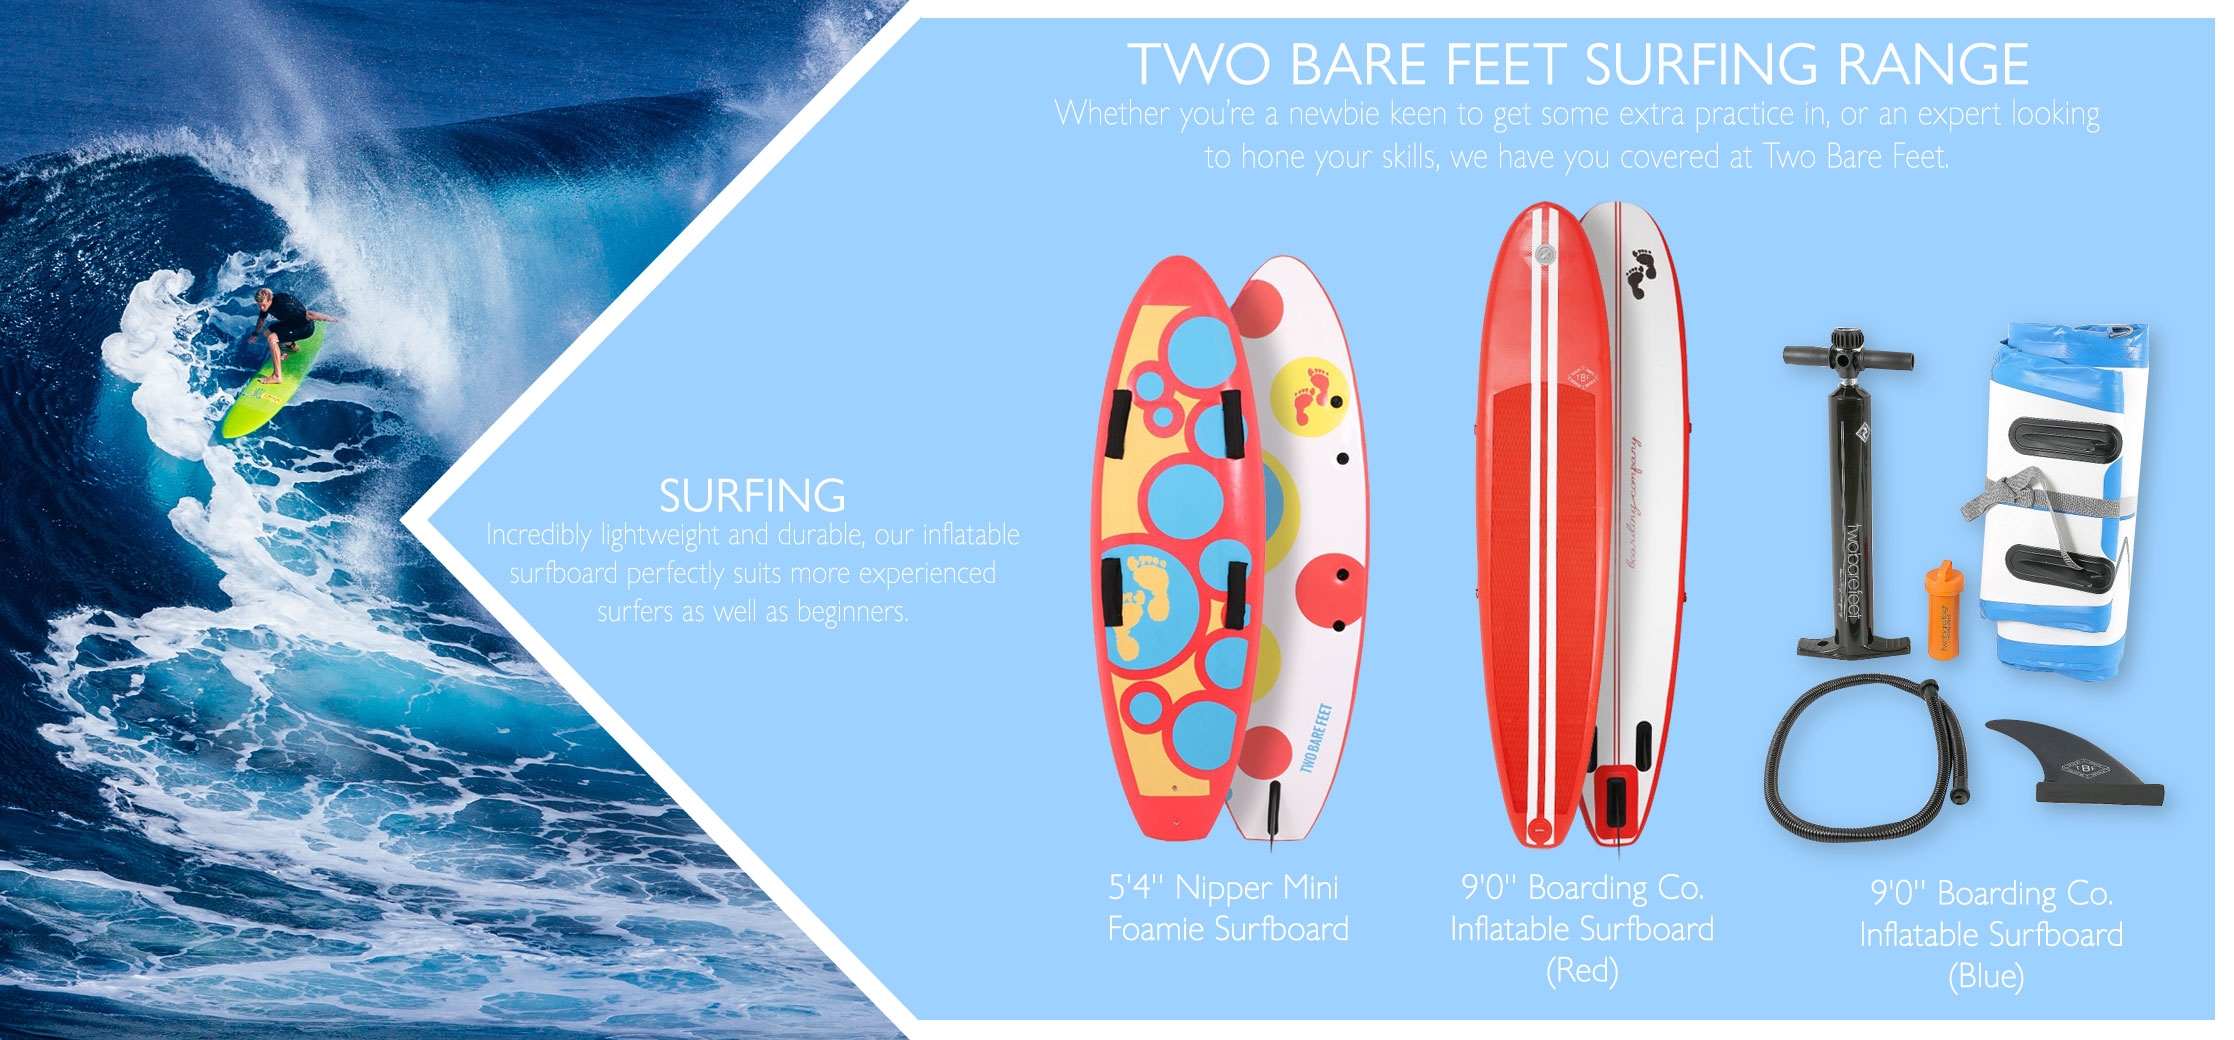 Two Bare Feet Foamy Surfboard Double Pack with Travel Boardbag Soft Surfboard 